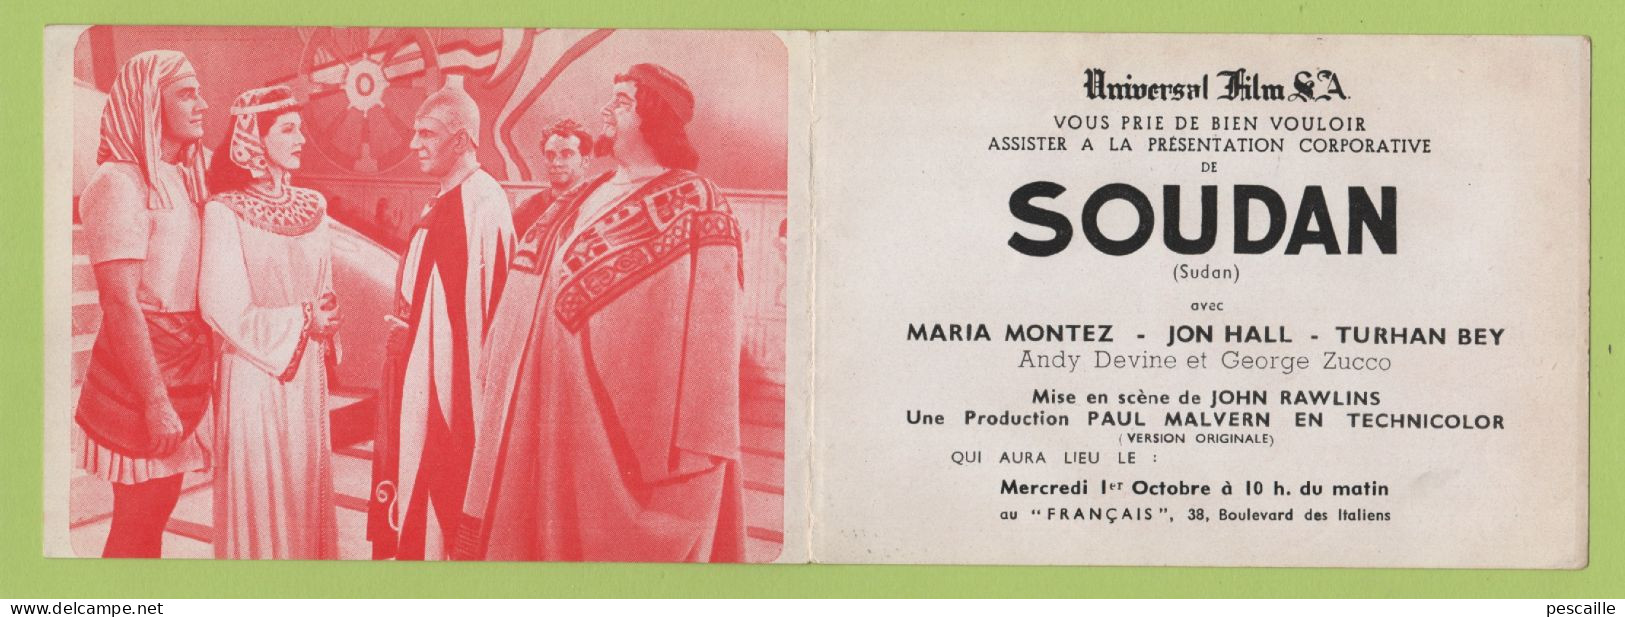 1945 ? - INVITATION UNIVERSAL FILM S.A. A LA PROJECTION DU FILM SOUDAN SUDAN AVEC MARIA MONTEZ JON HALL TURHAN BEY ... - Bioscoopreclame